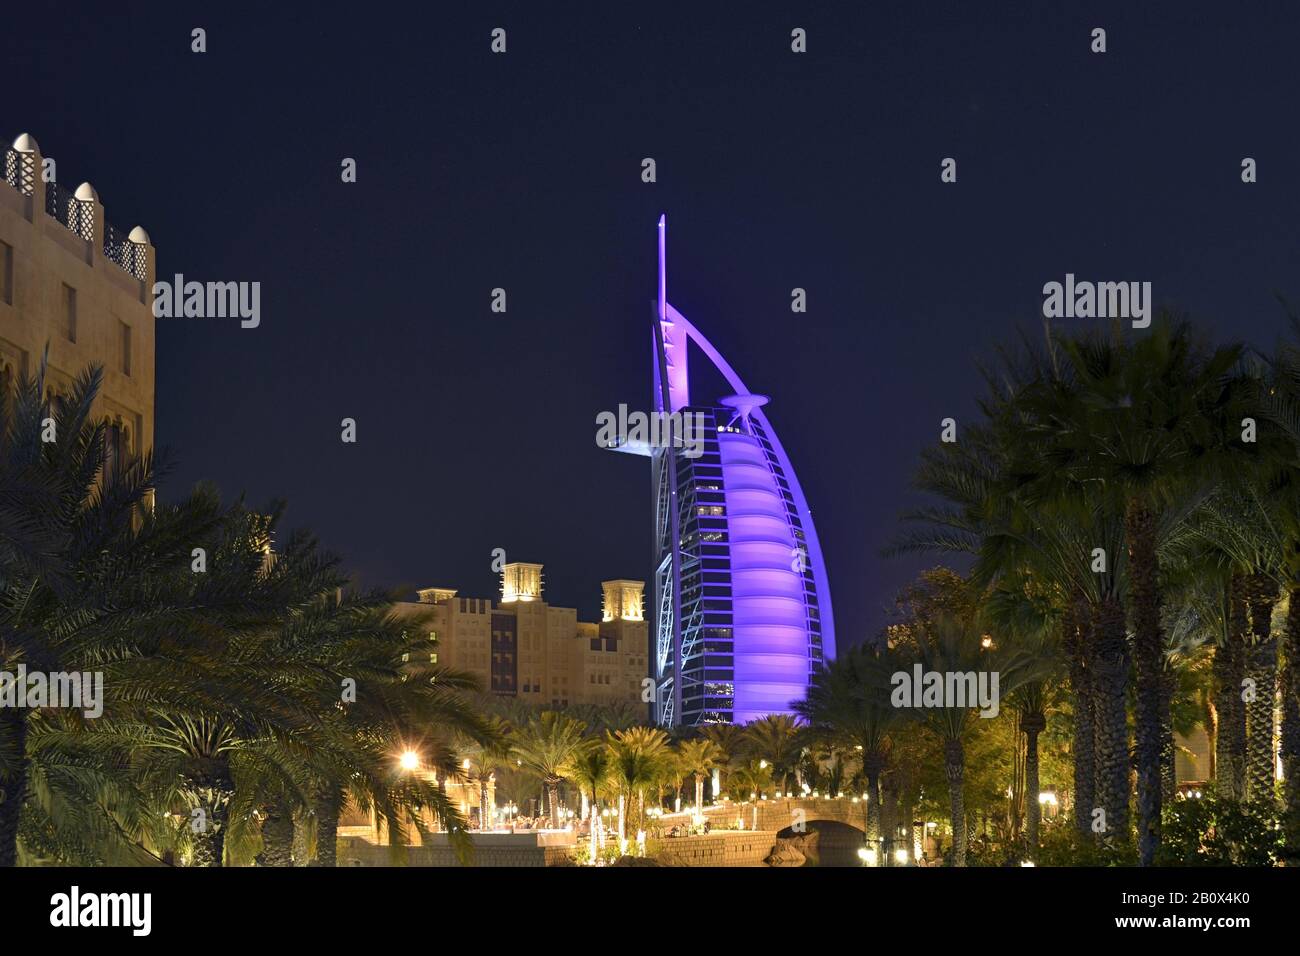 Burj al Arab, illuminated, Souk Madinat, Jumeirah, Emirate of Dubai, United Arab Emirates, Arabian Peninsula, Middle East Stock Photo